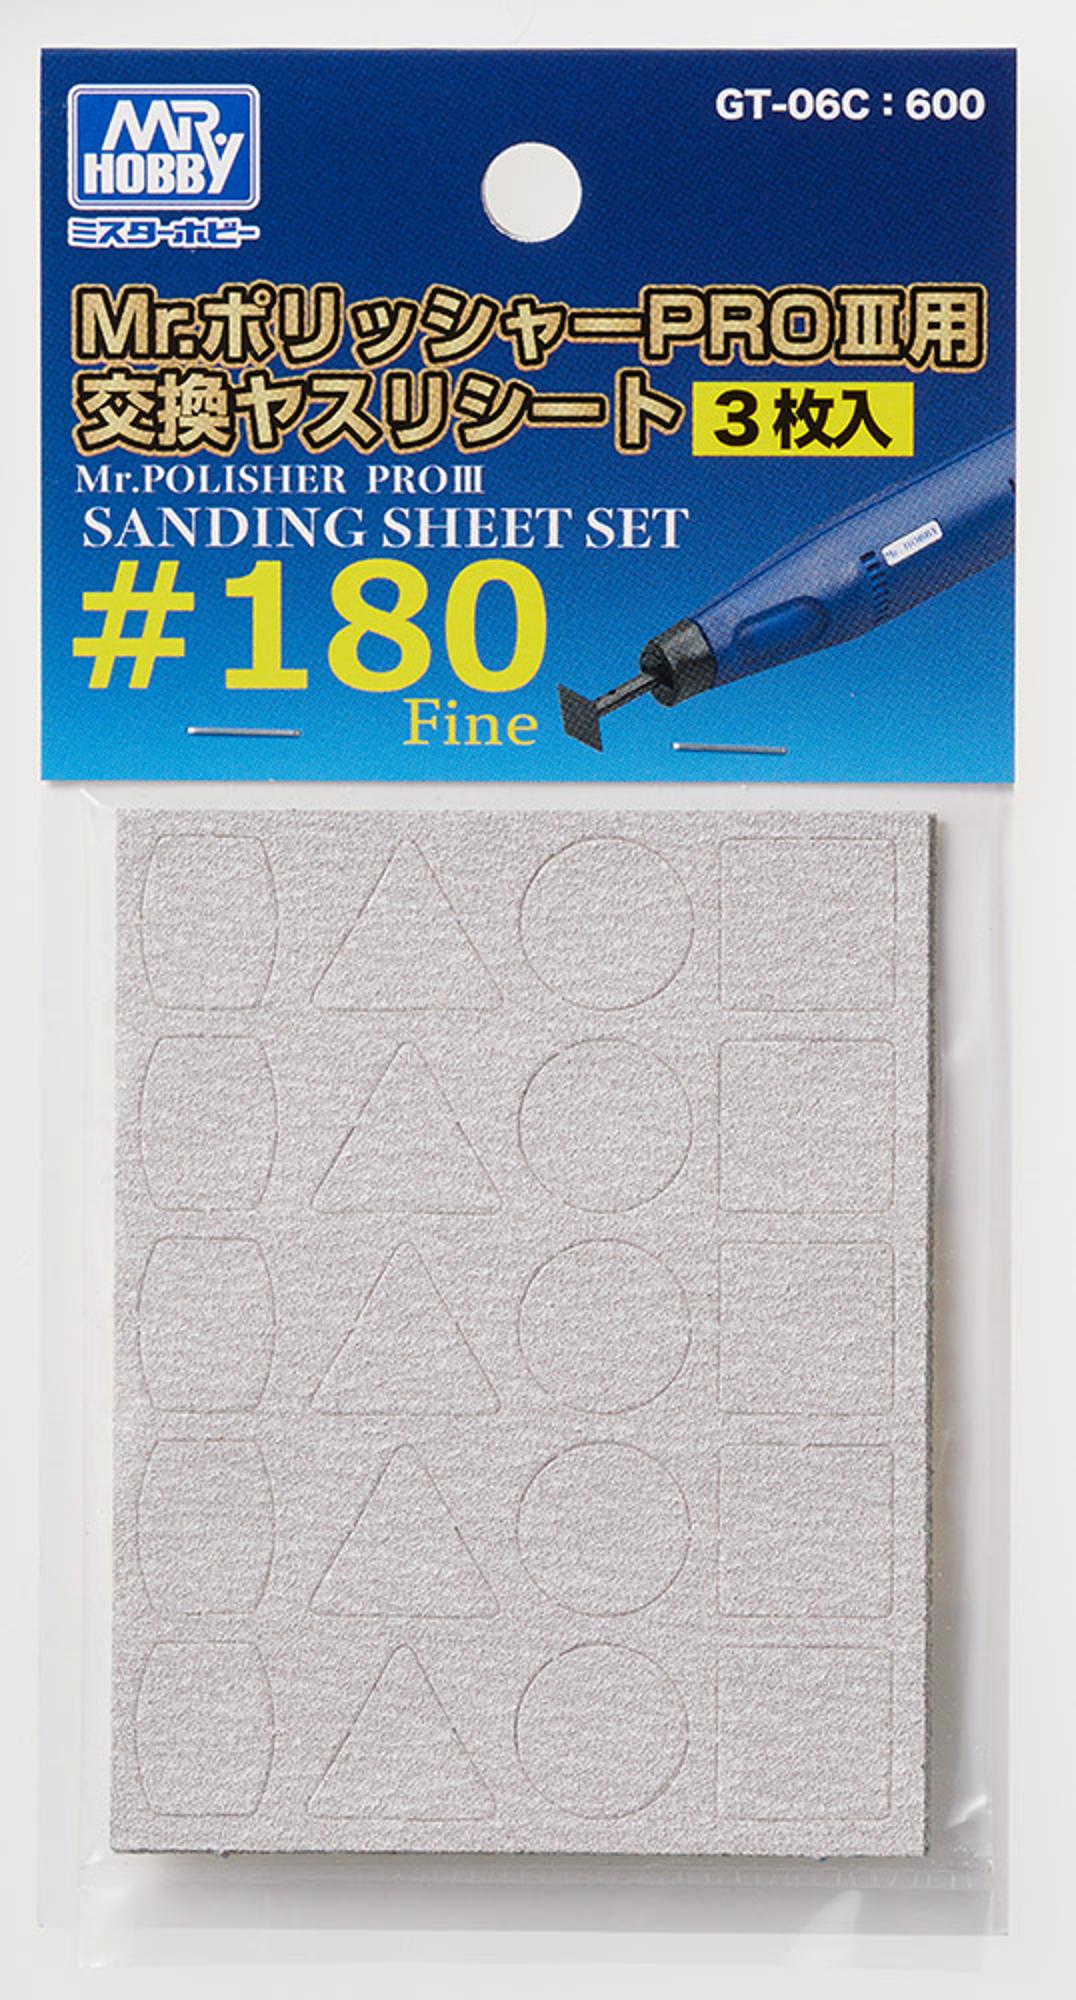 Mr. Polisher PRO III Sanding Sheet: #180 Fine